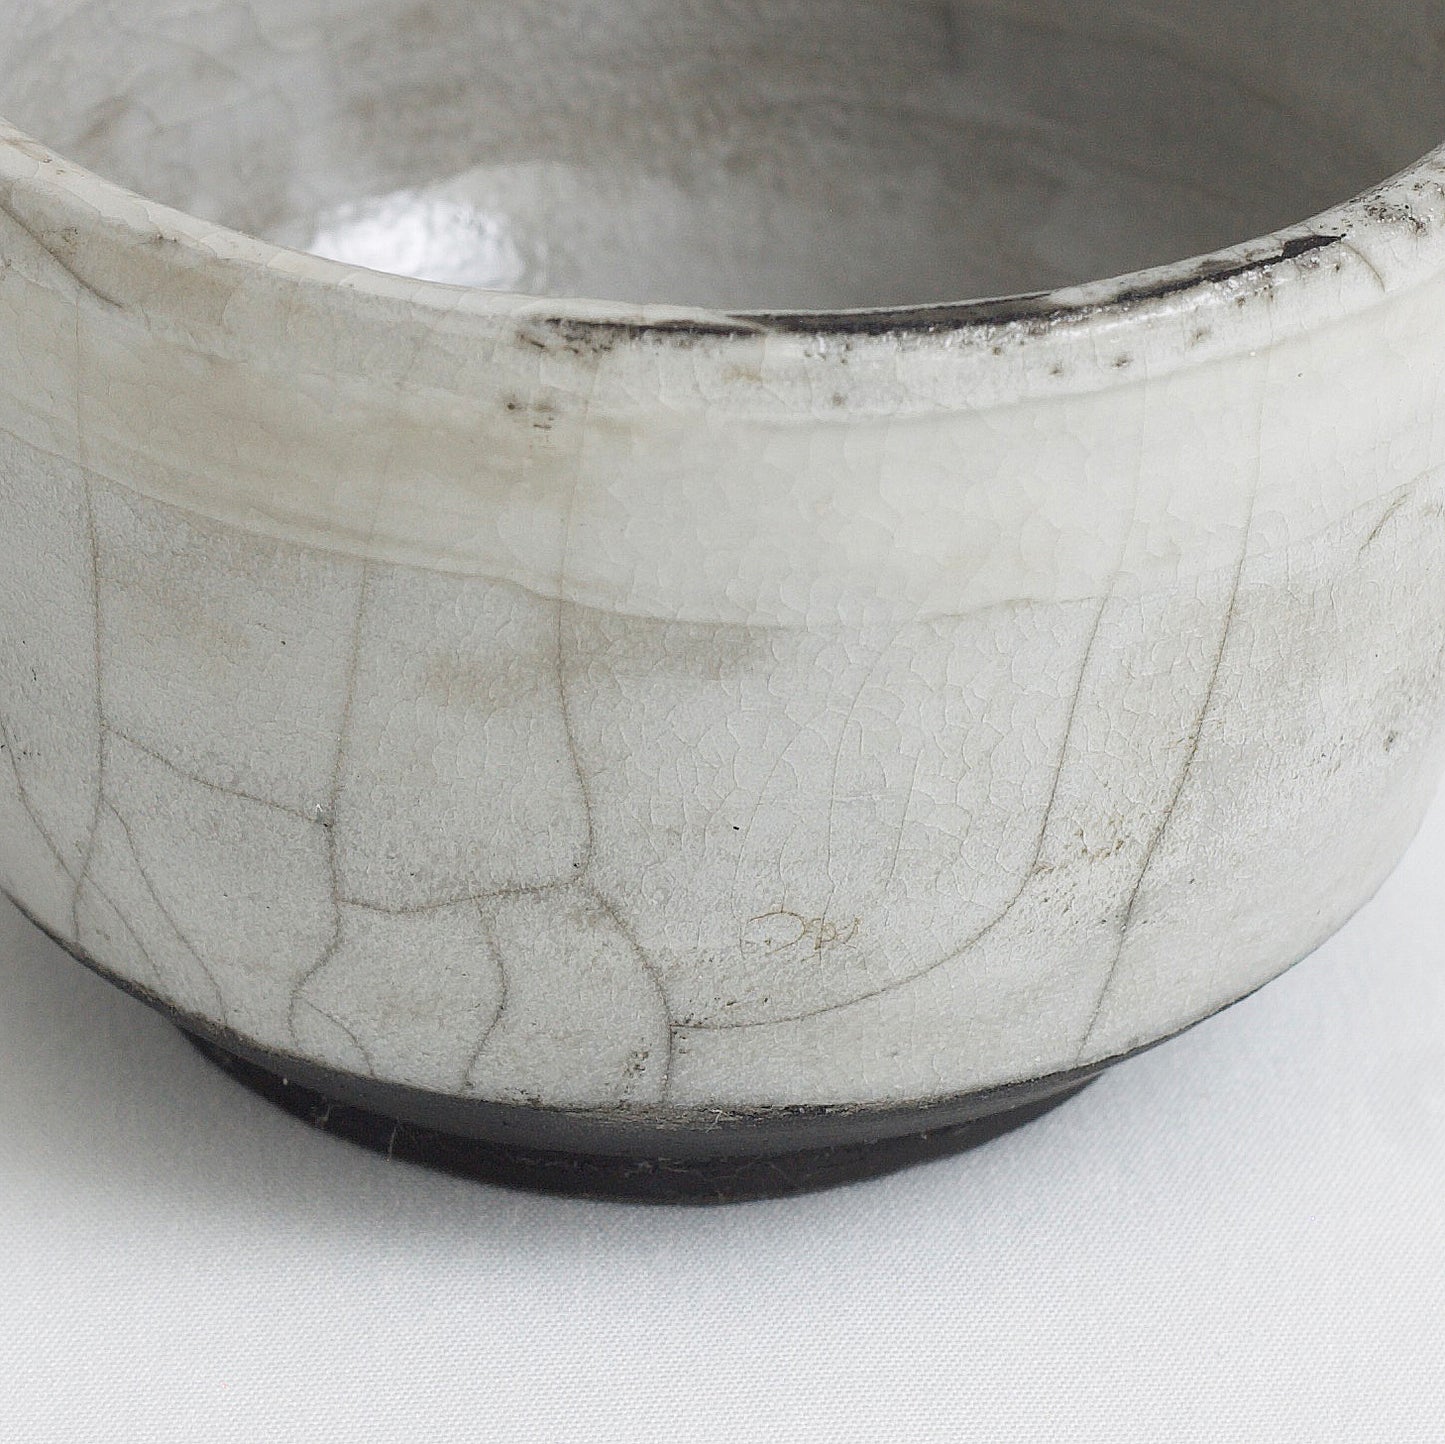 Japanese Sake Tea Cups Raku Ceramic Grey Black Bottom